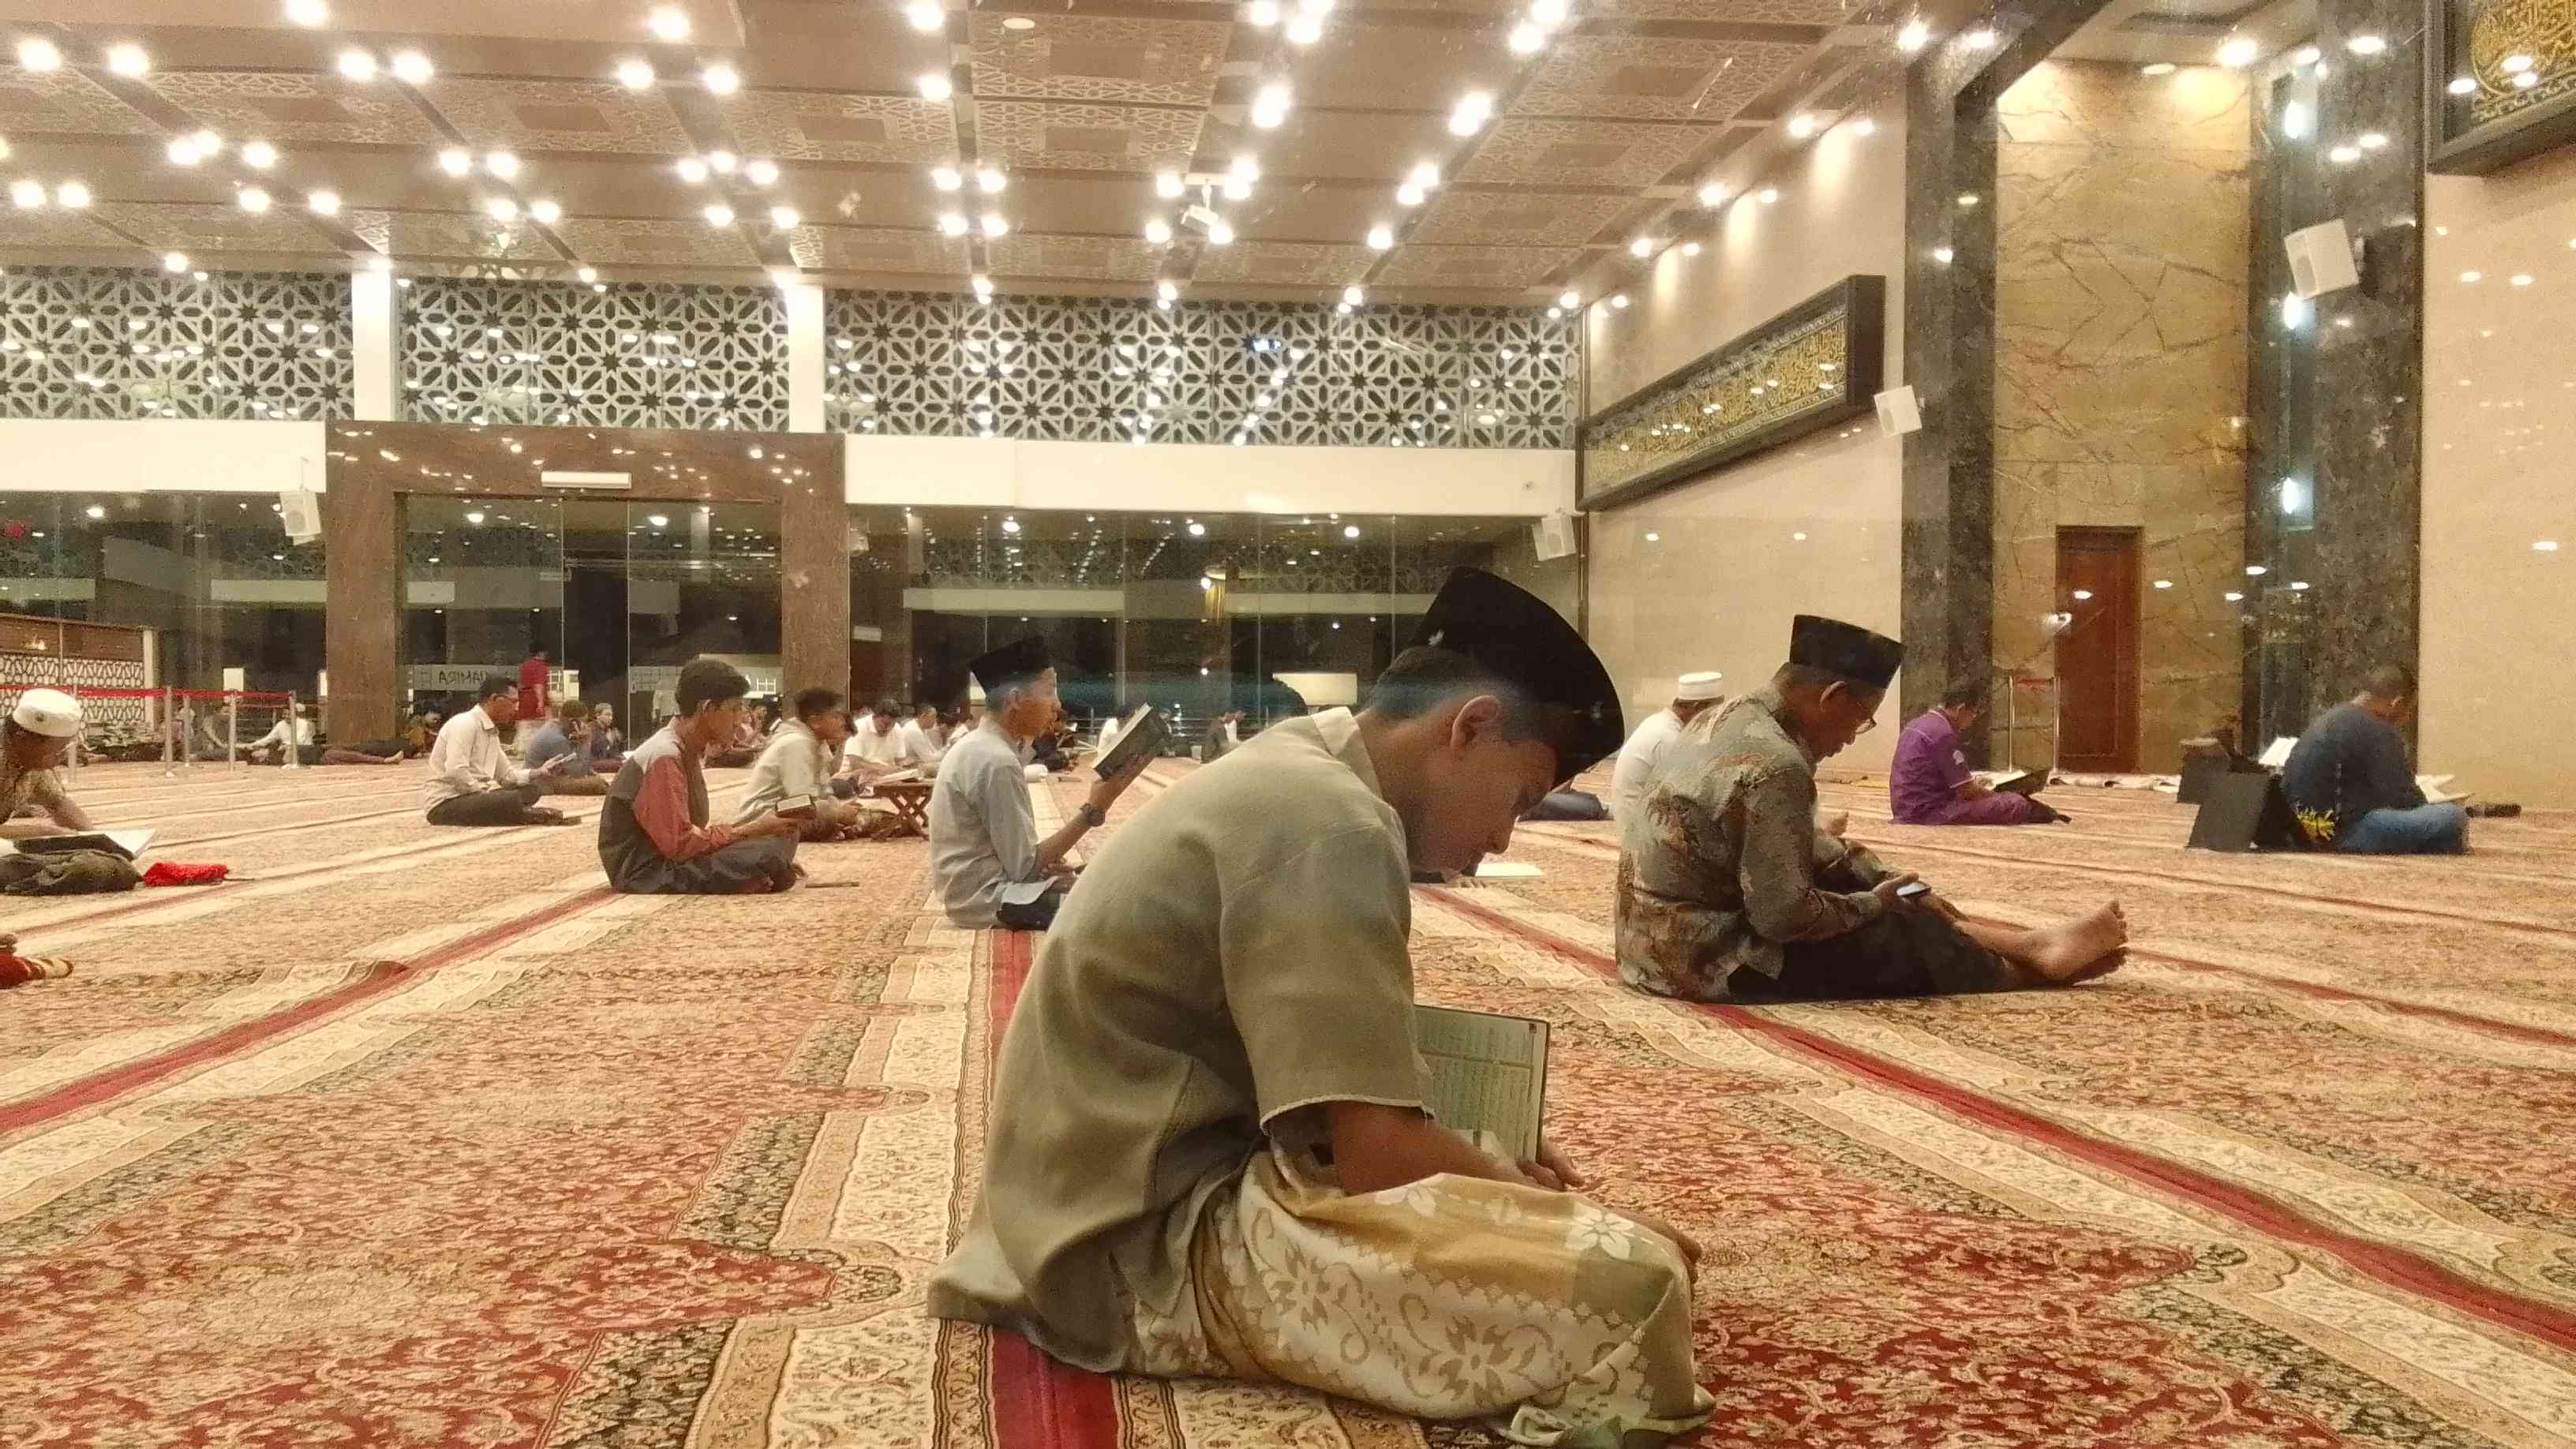 Apa Saja yang Dilakukan Selama Iktikaf di Masjid pada 10 Hari Terakhir Ramadan